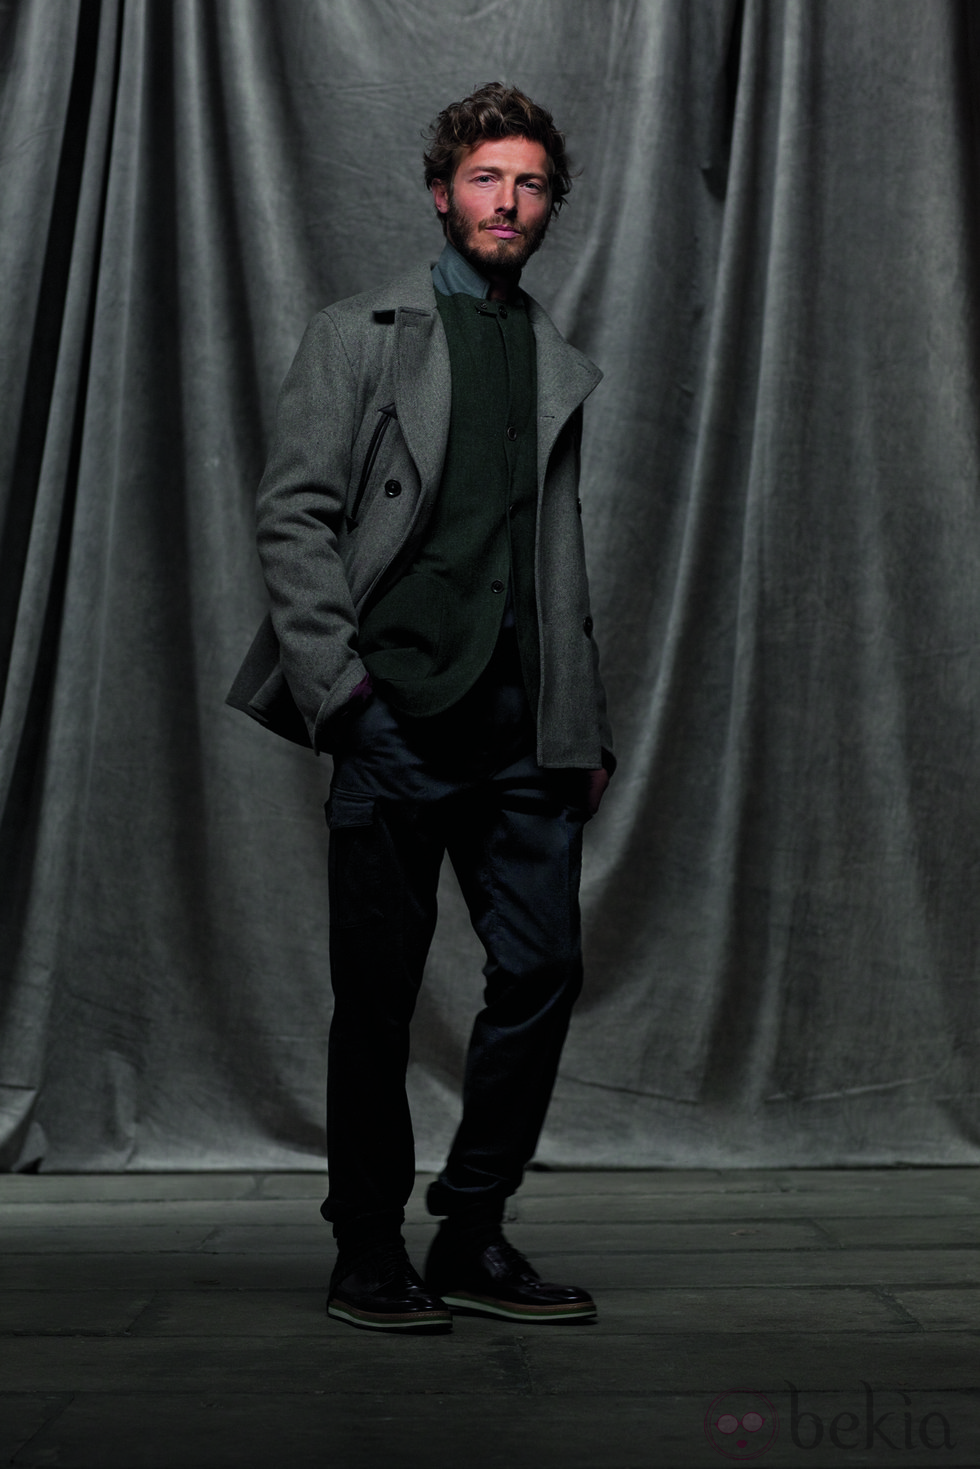 Abrigo gris, chaqueta verde con pantalones oscuros de la colección otoño/invierno 2012/2013 de Chevignon